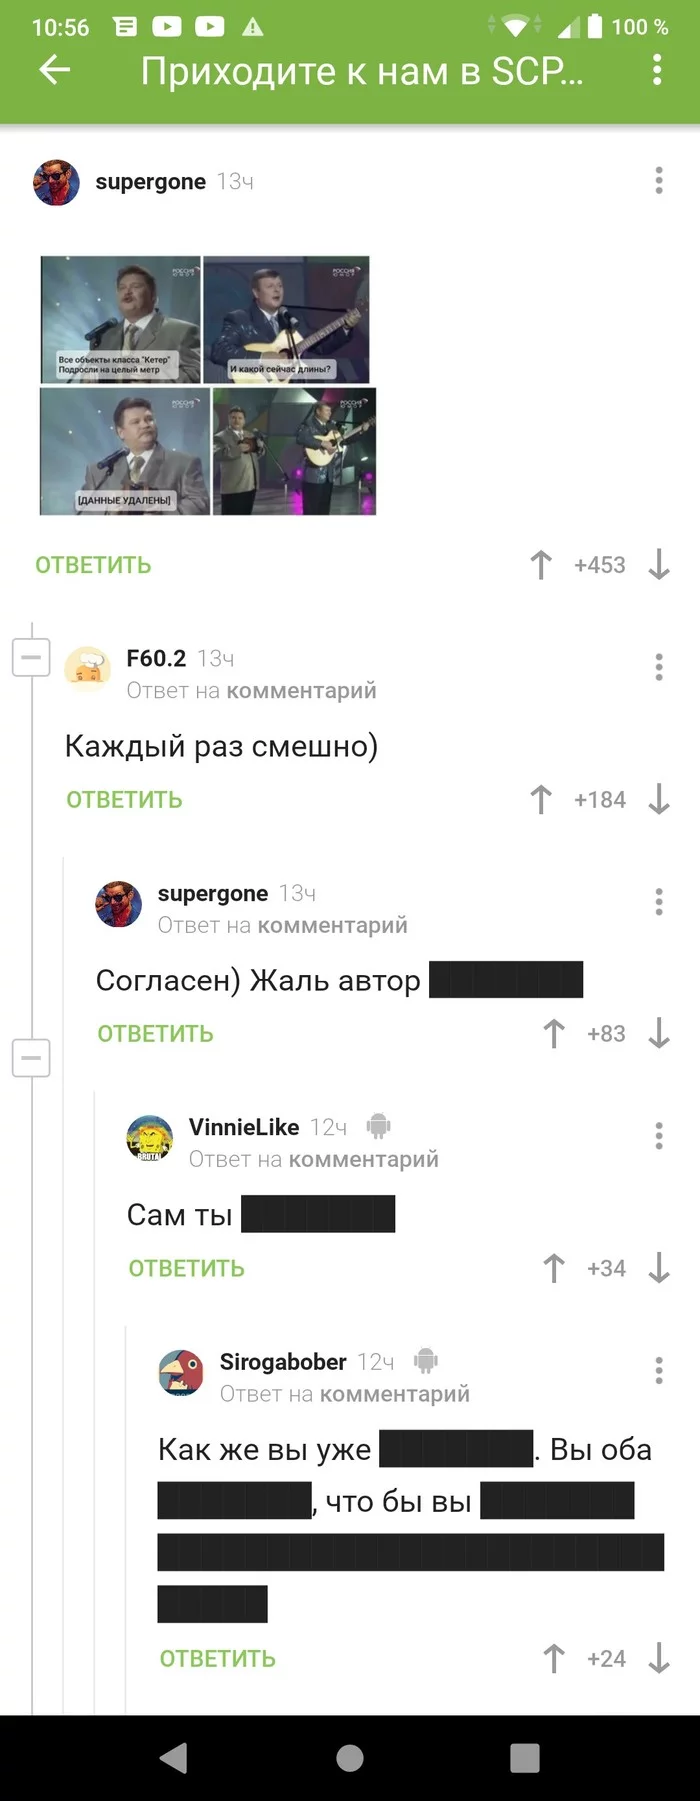 [DATA EXPUNGED] - SCP, Comments on Peekaboo, Screenshot, Data deleted, Bandurin and Vashukov, Longpost